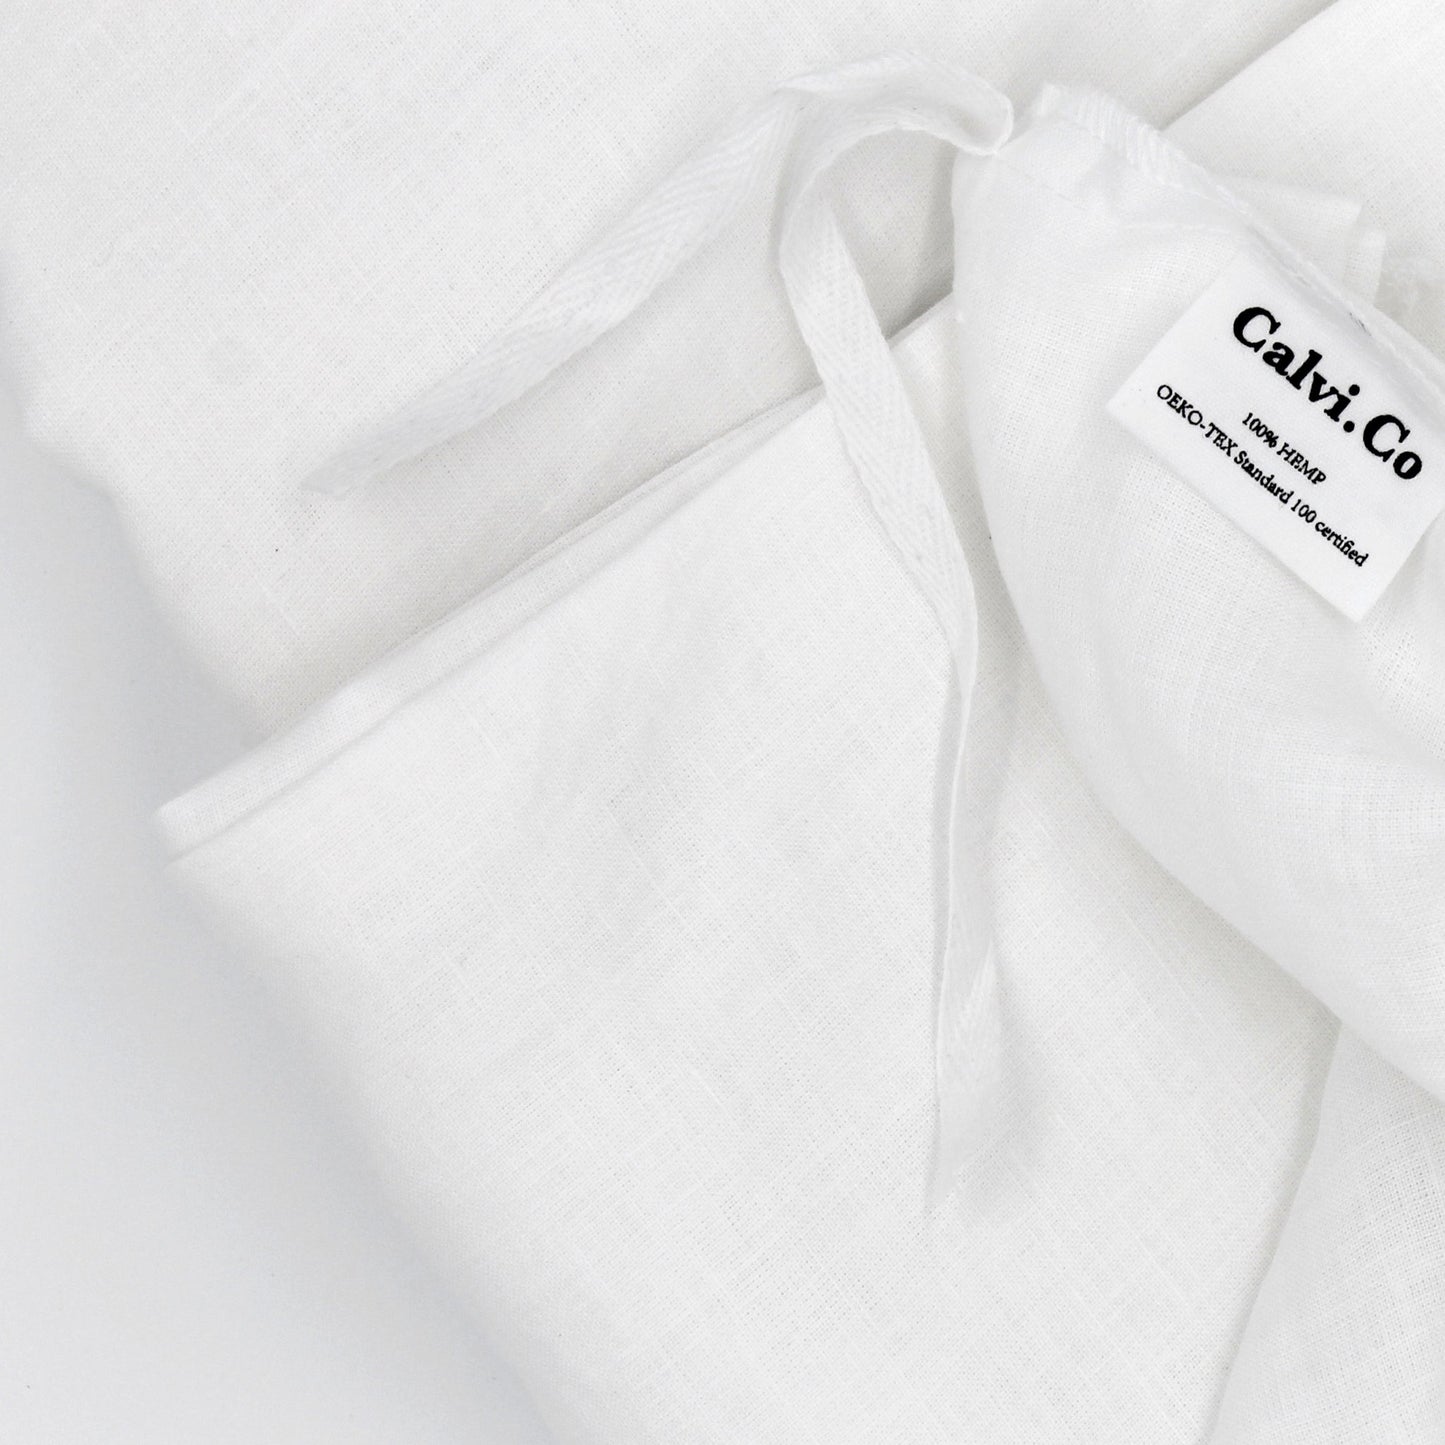 duvet quilt cover set in pure hemp linen white fabric with internal doona ties